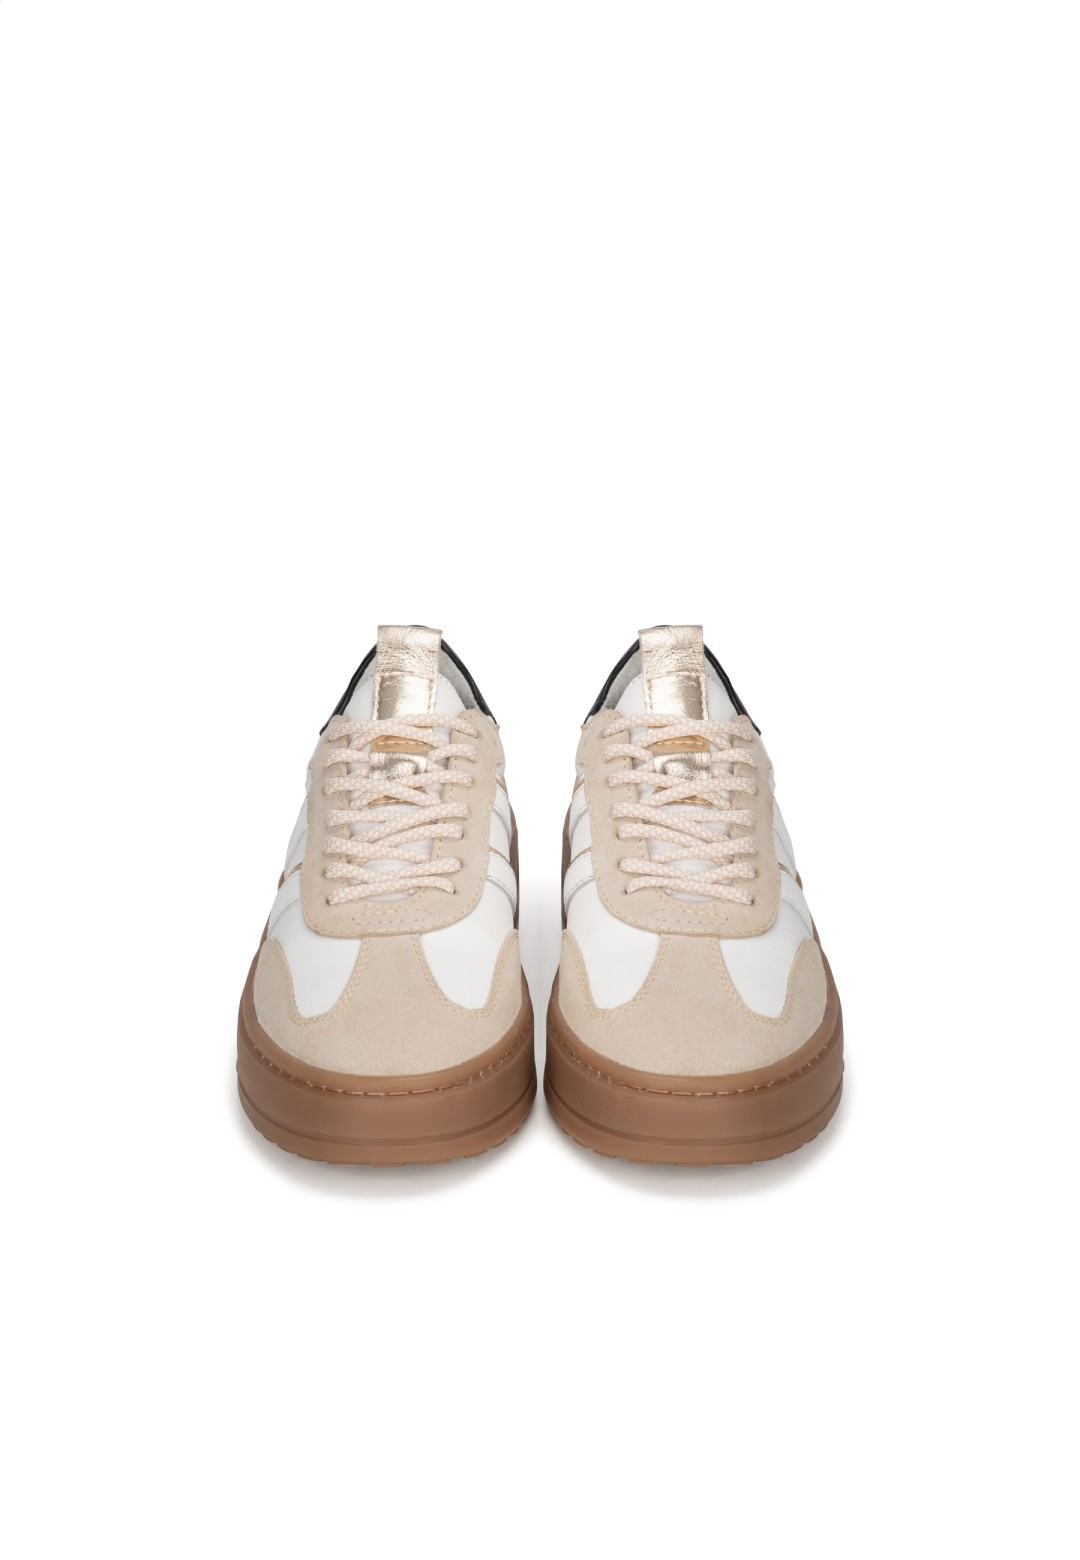 PS POELMAN Dames Anemone Sneakers | De Officiële POELMAN Webshop